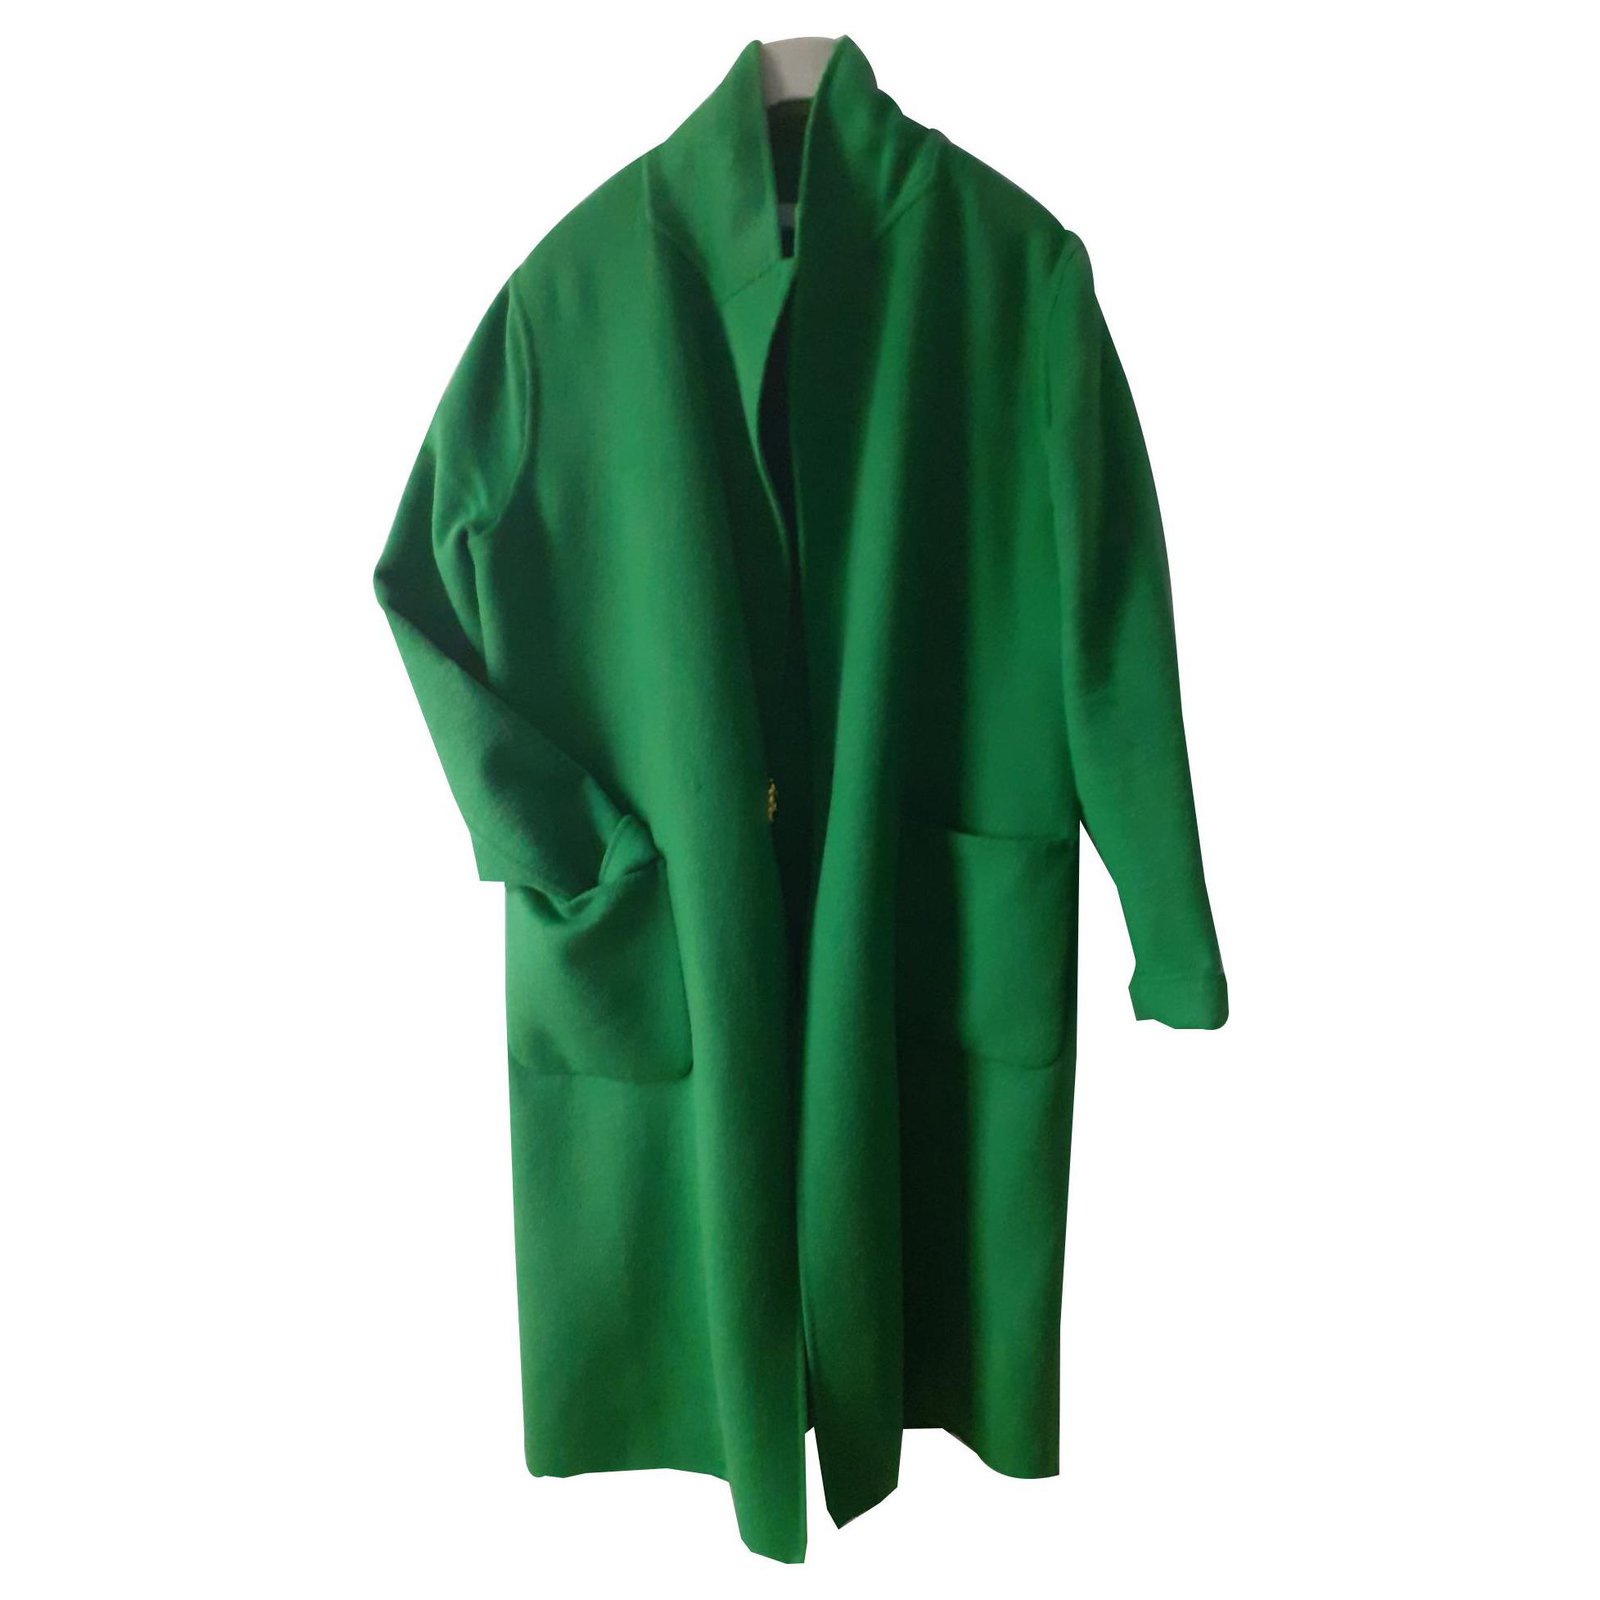 zara long green coat